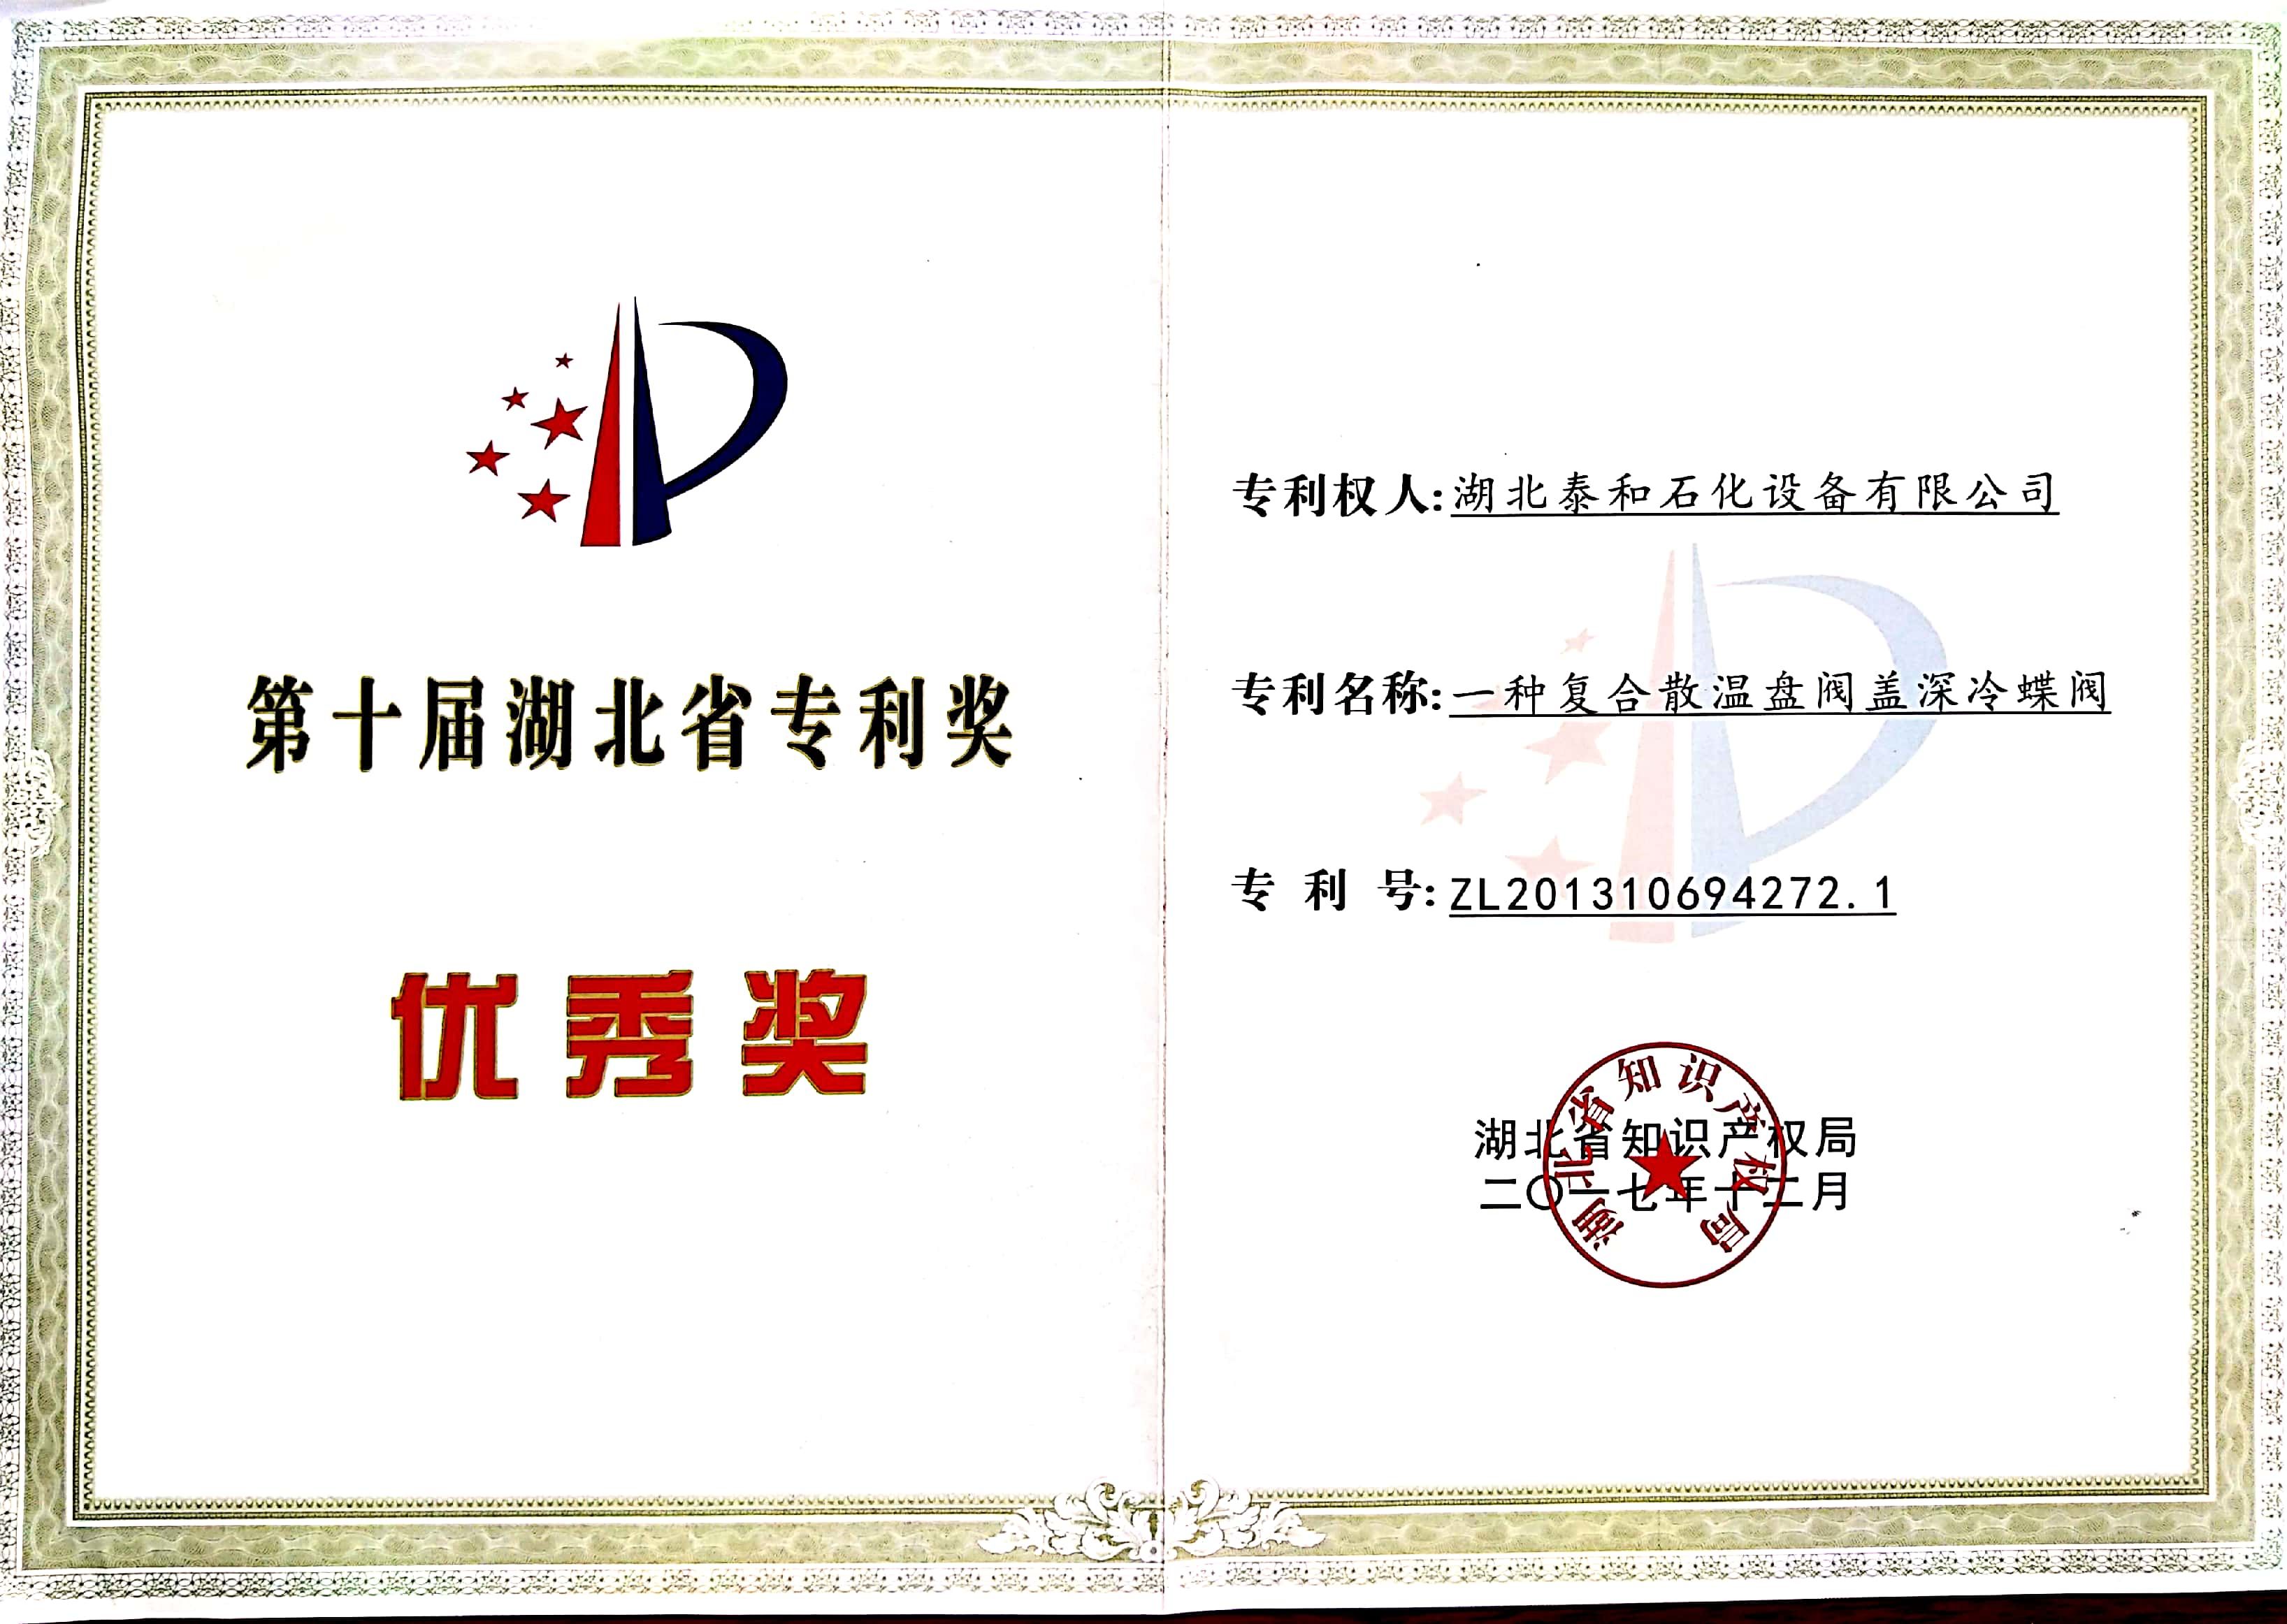 Hubei Provincial Patent Award - Excellent Award